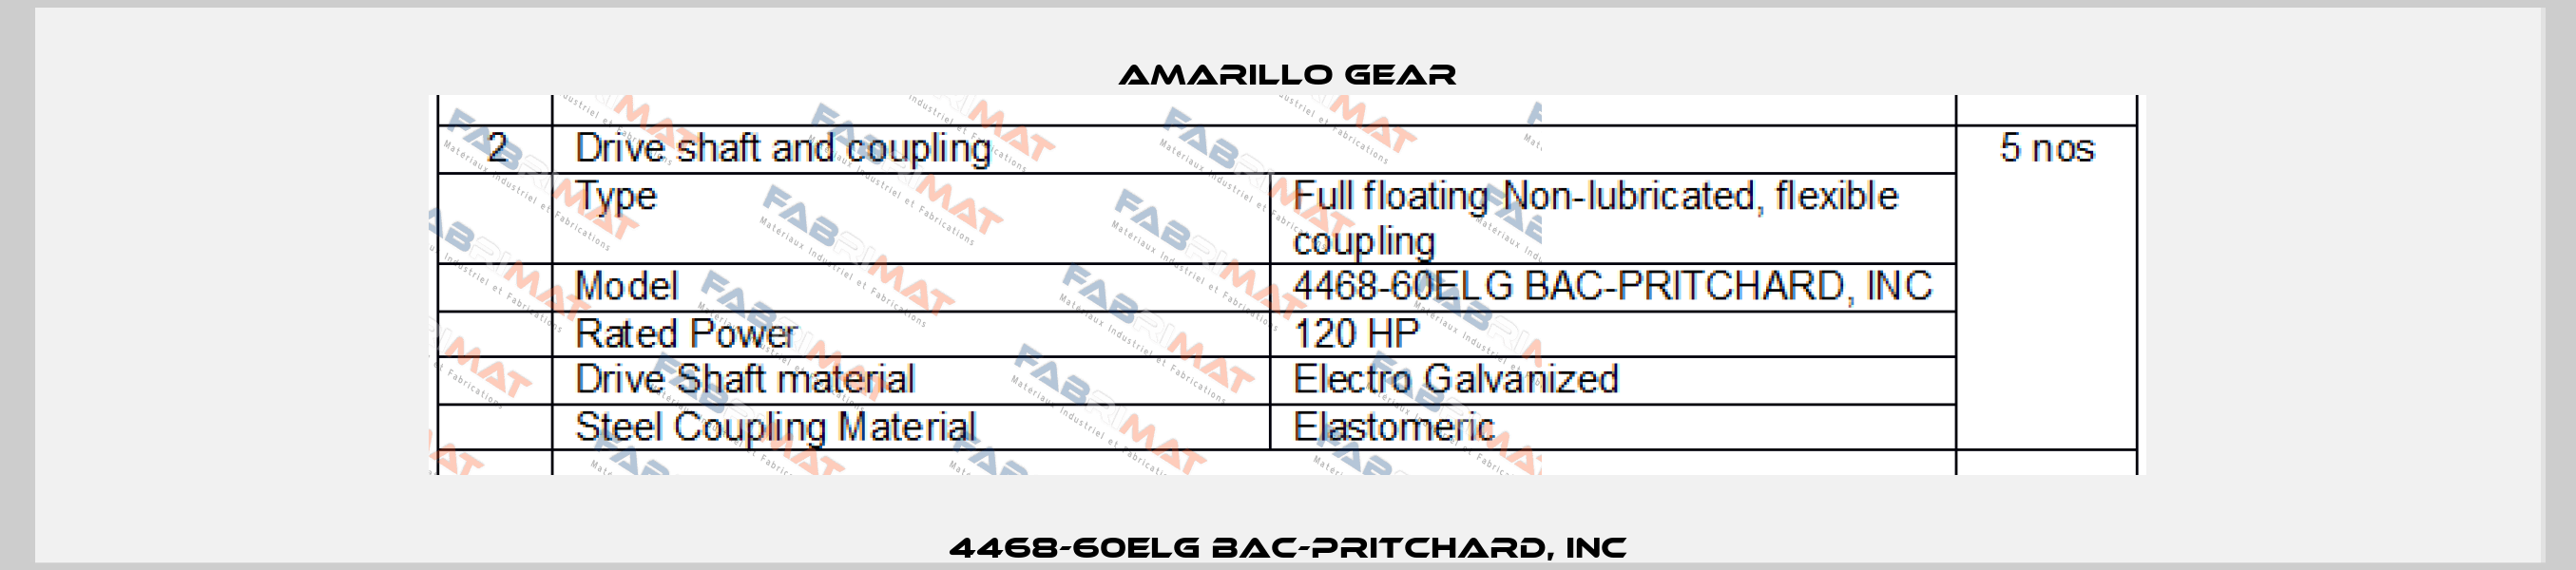 4468-60ELG BAC-PRITCHARD, INC Amarillo Gear